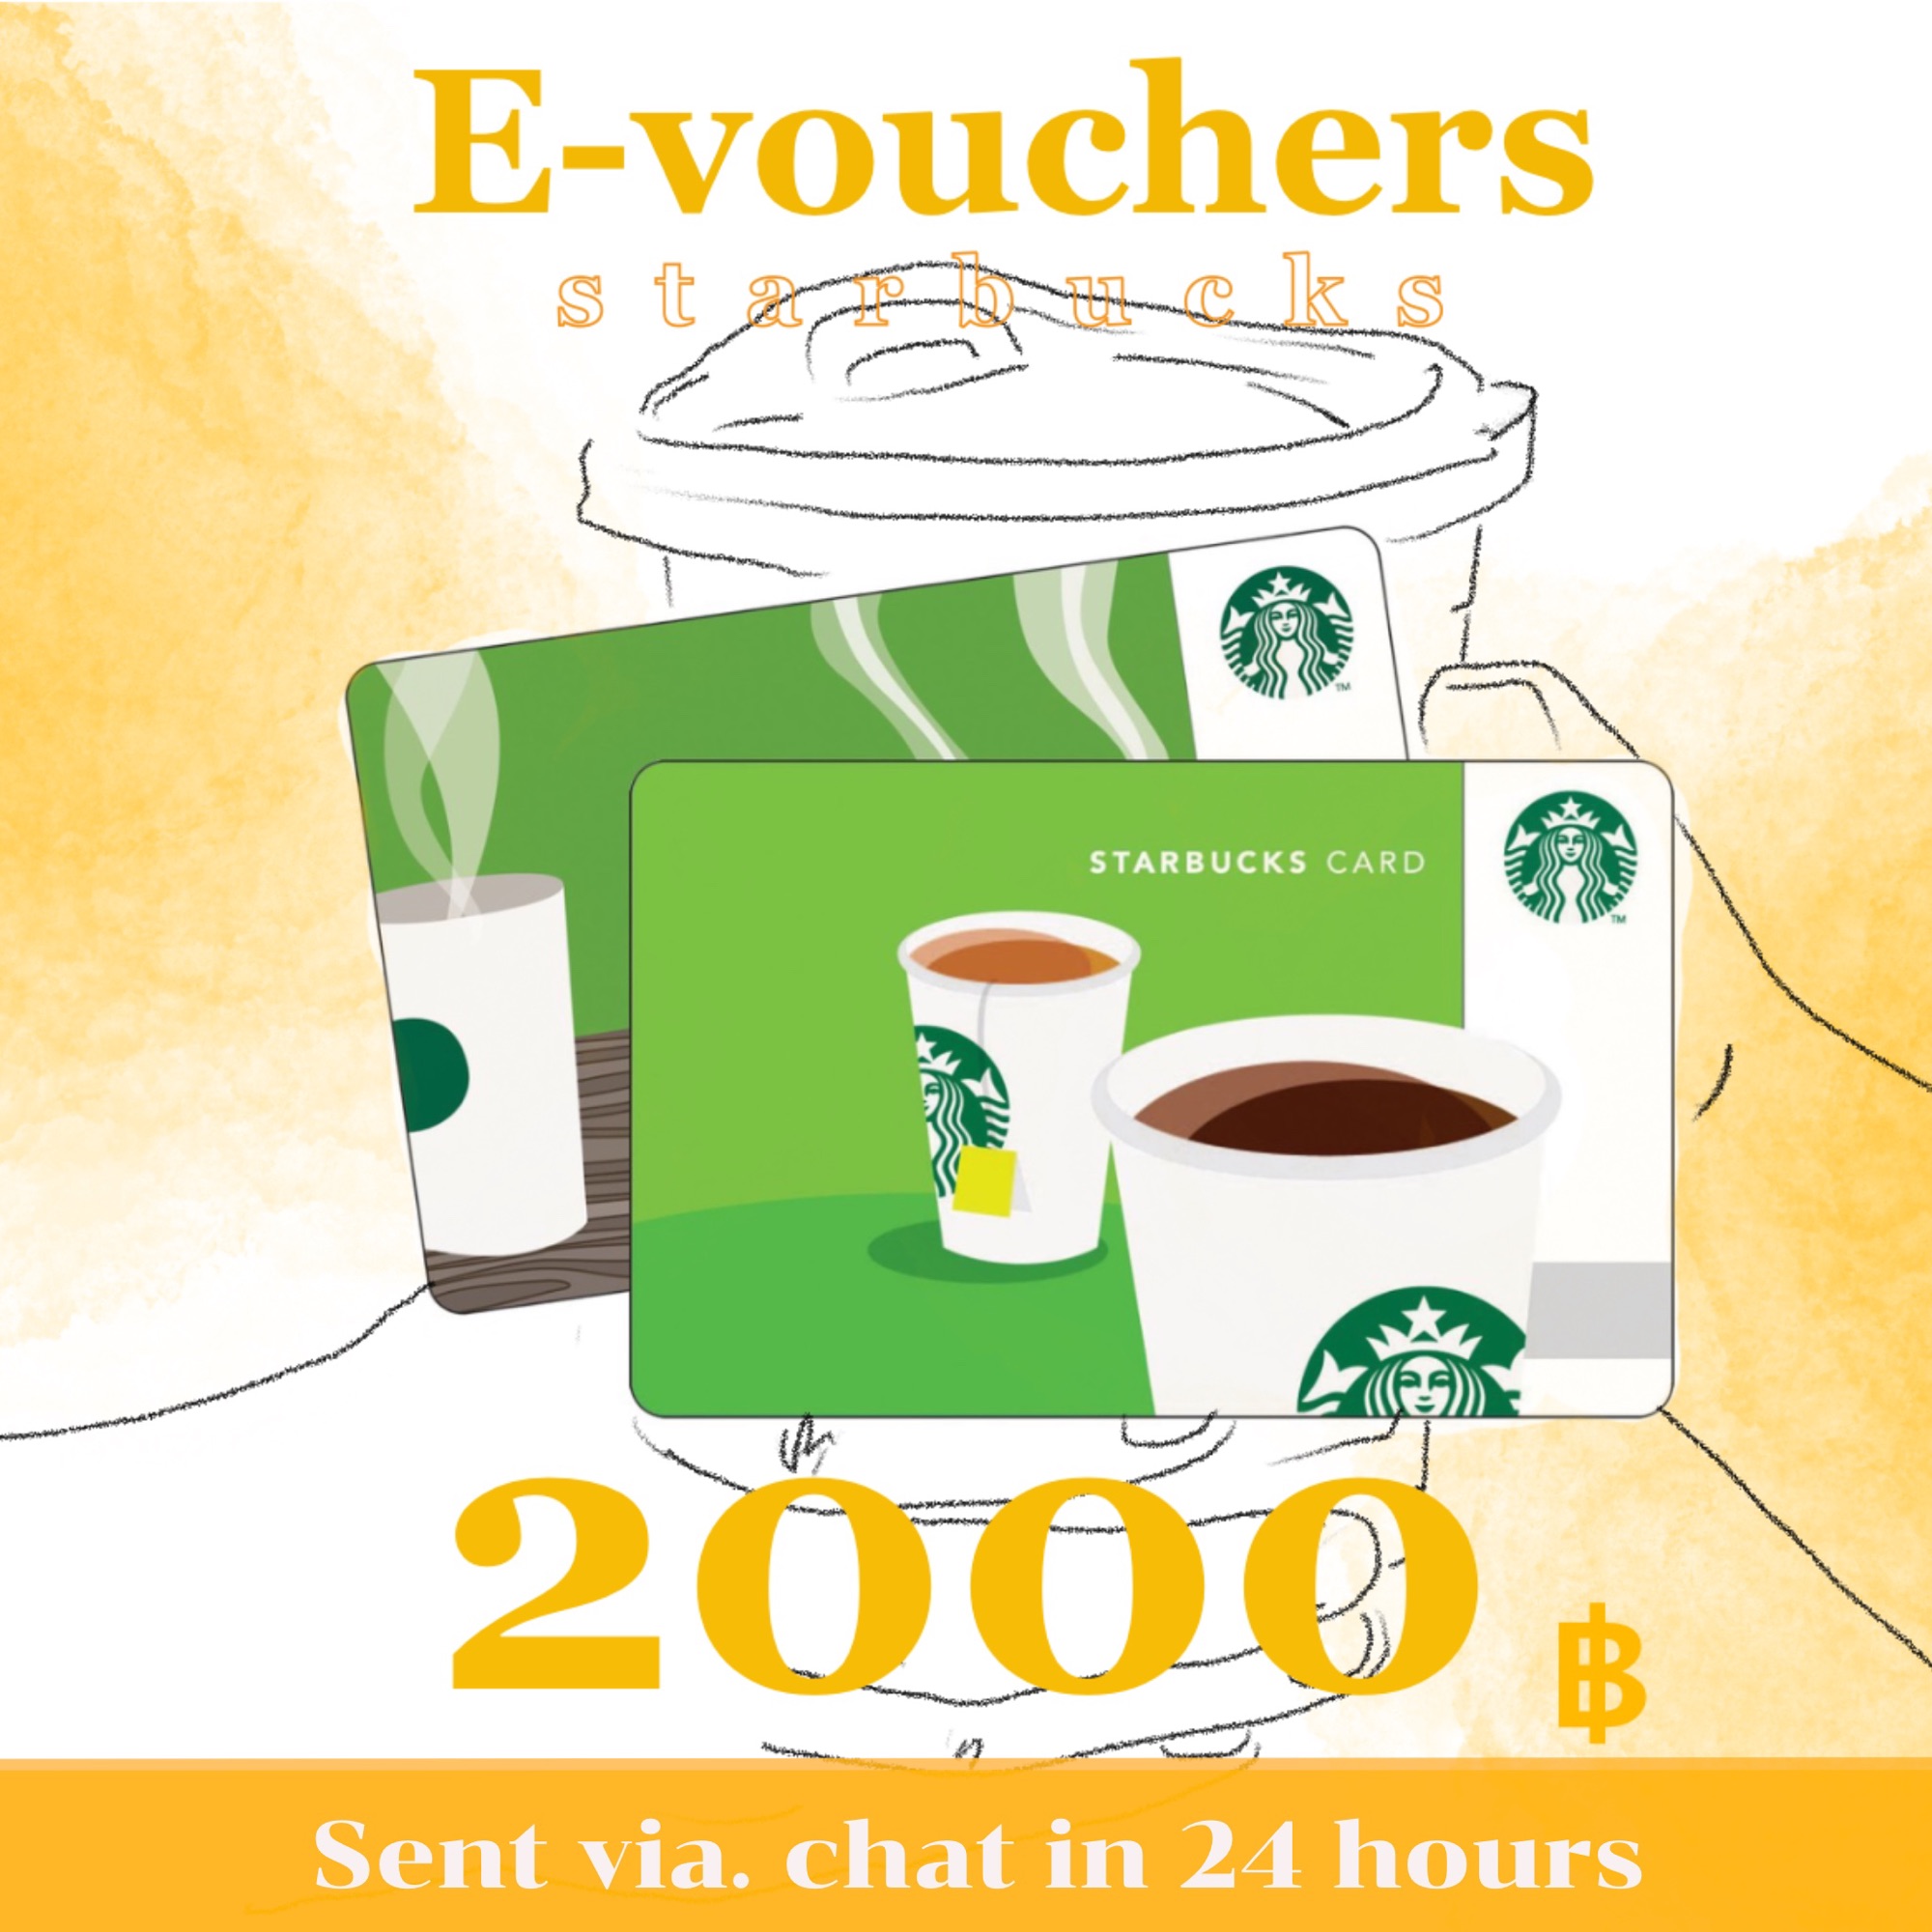 Starbucks Card(E-Voucher)**ส่งโค้ด**บัตรสตาร์บักส์ มูลค่า 2000 บาท